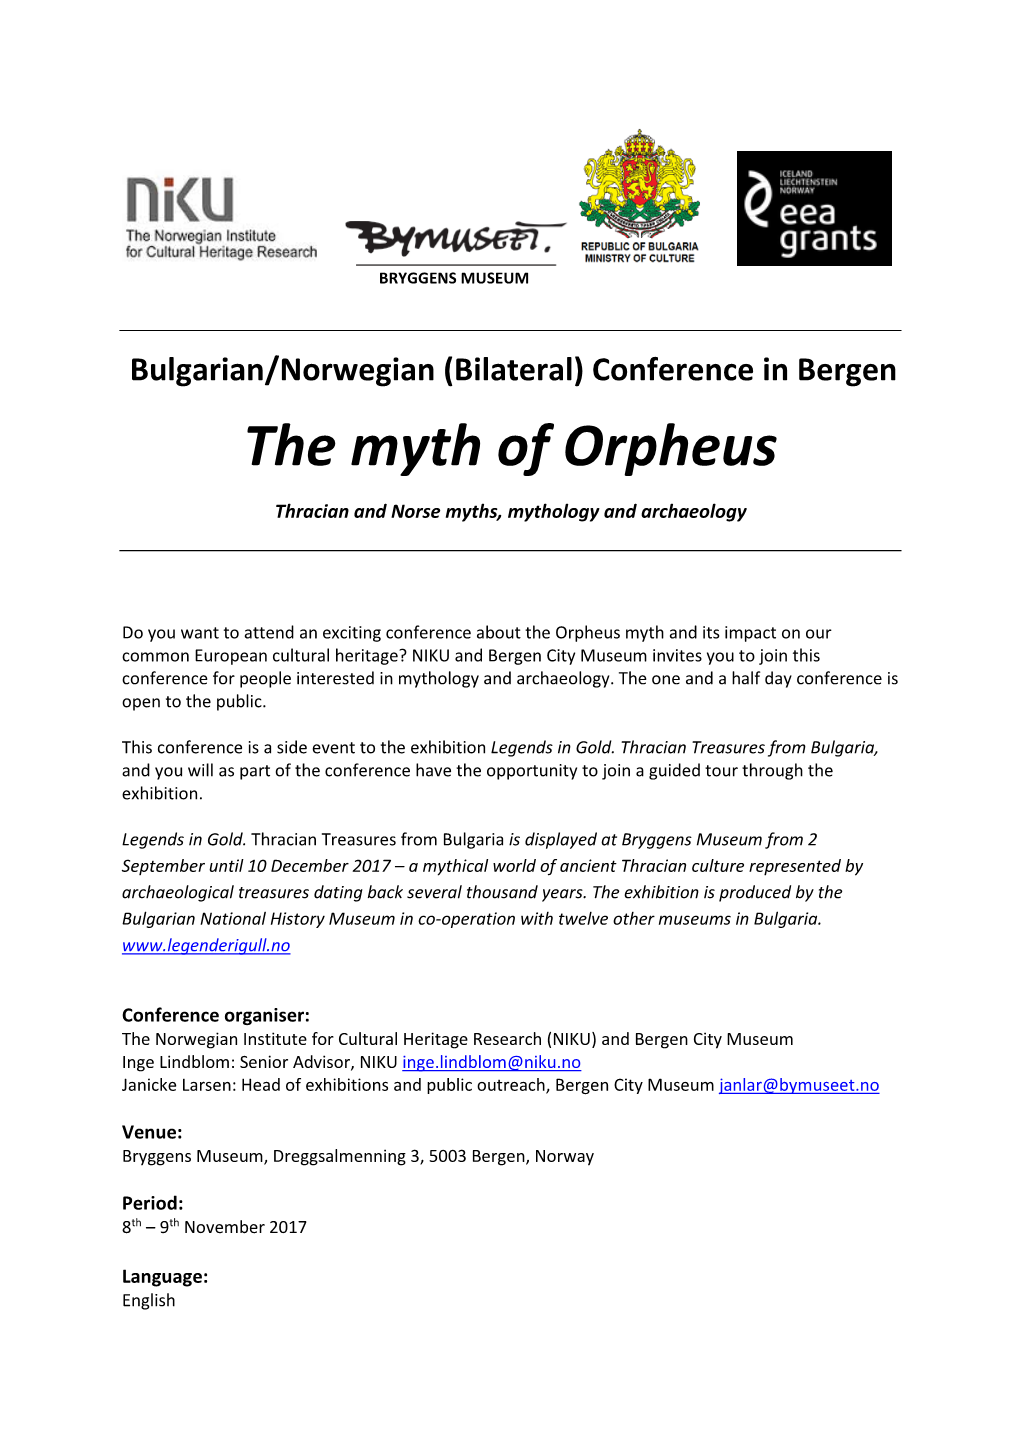 The Myth of Orpheus